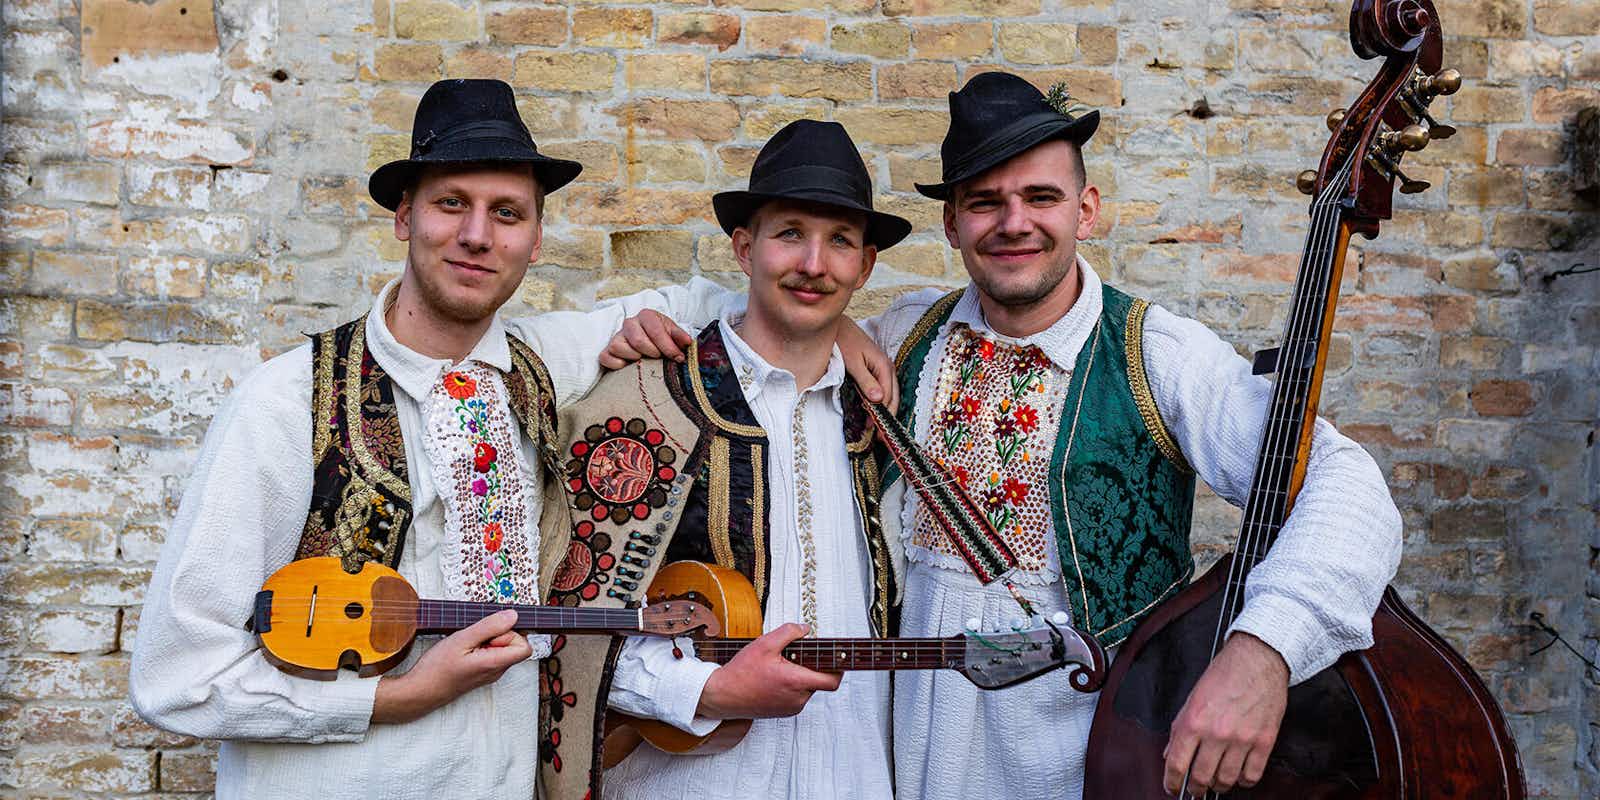 Street musicians in Hungary (Credit: Viking)